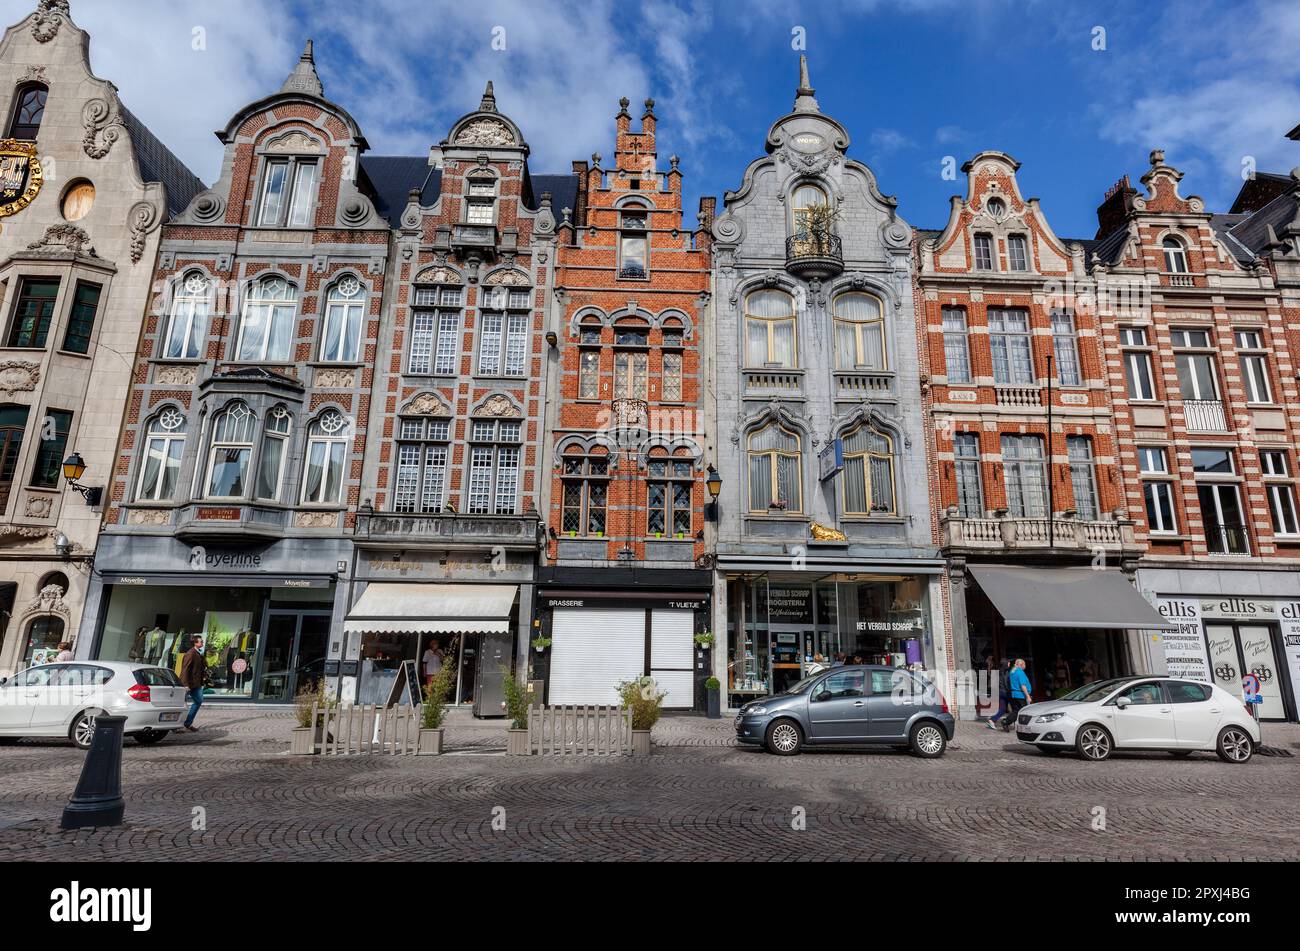 Historic gabled buildings now shops and offices in Ijzerenleen in Old Town, Mechelen, Belgium Stock Photo